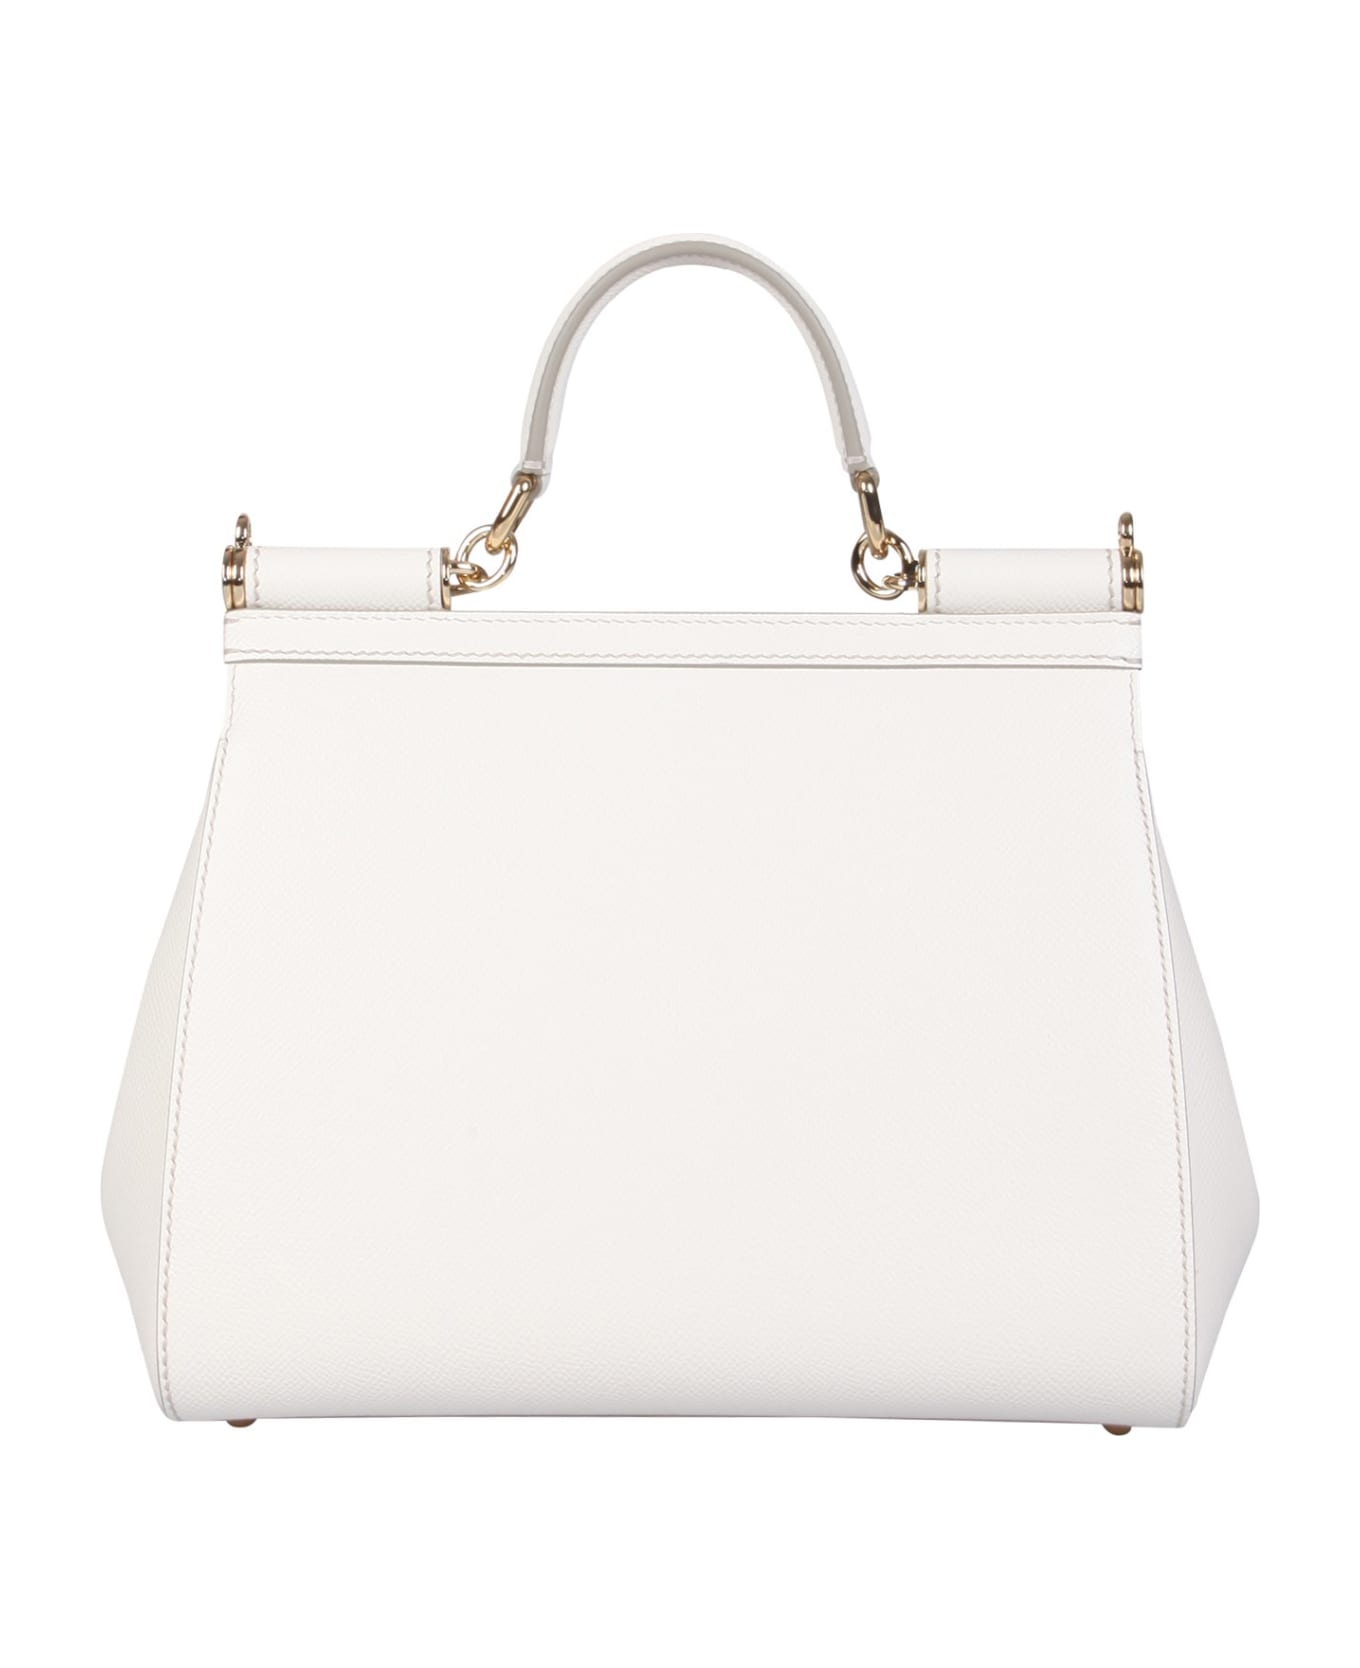 Dolce & Gabbana Sicily Handbag - White